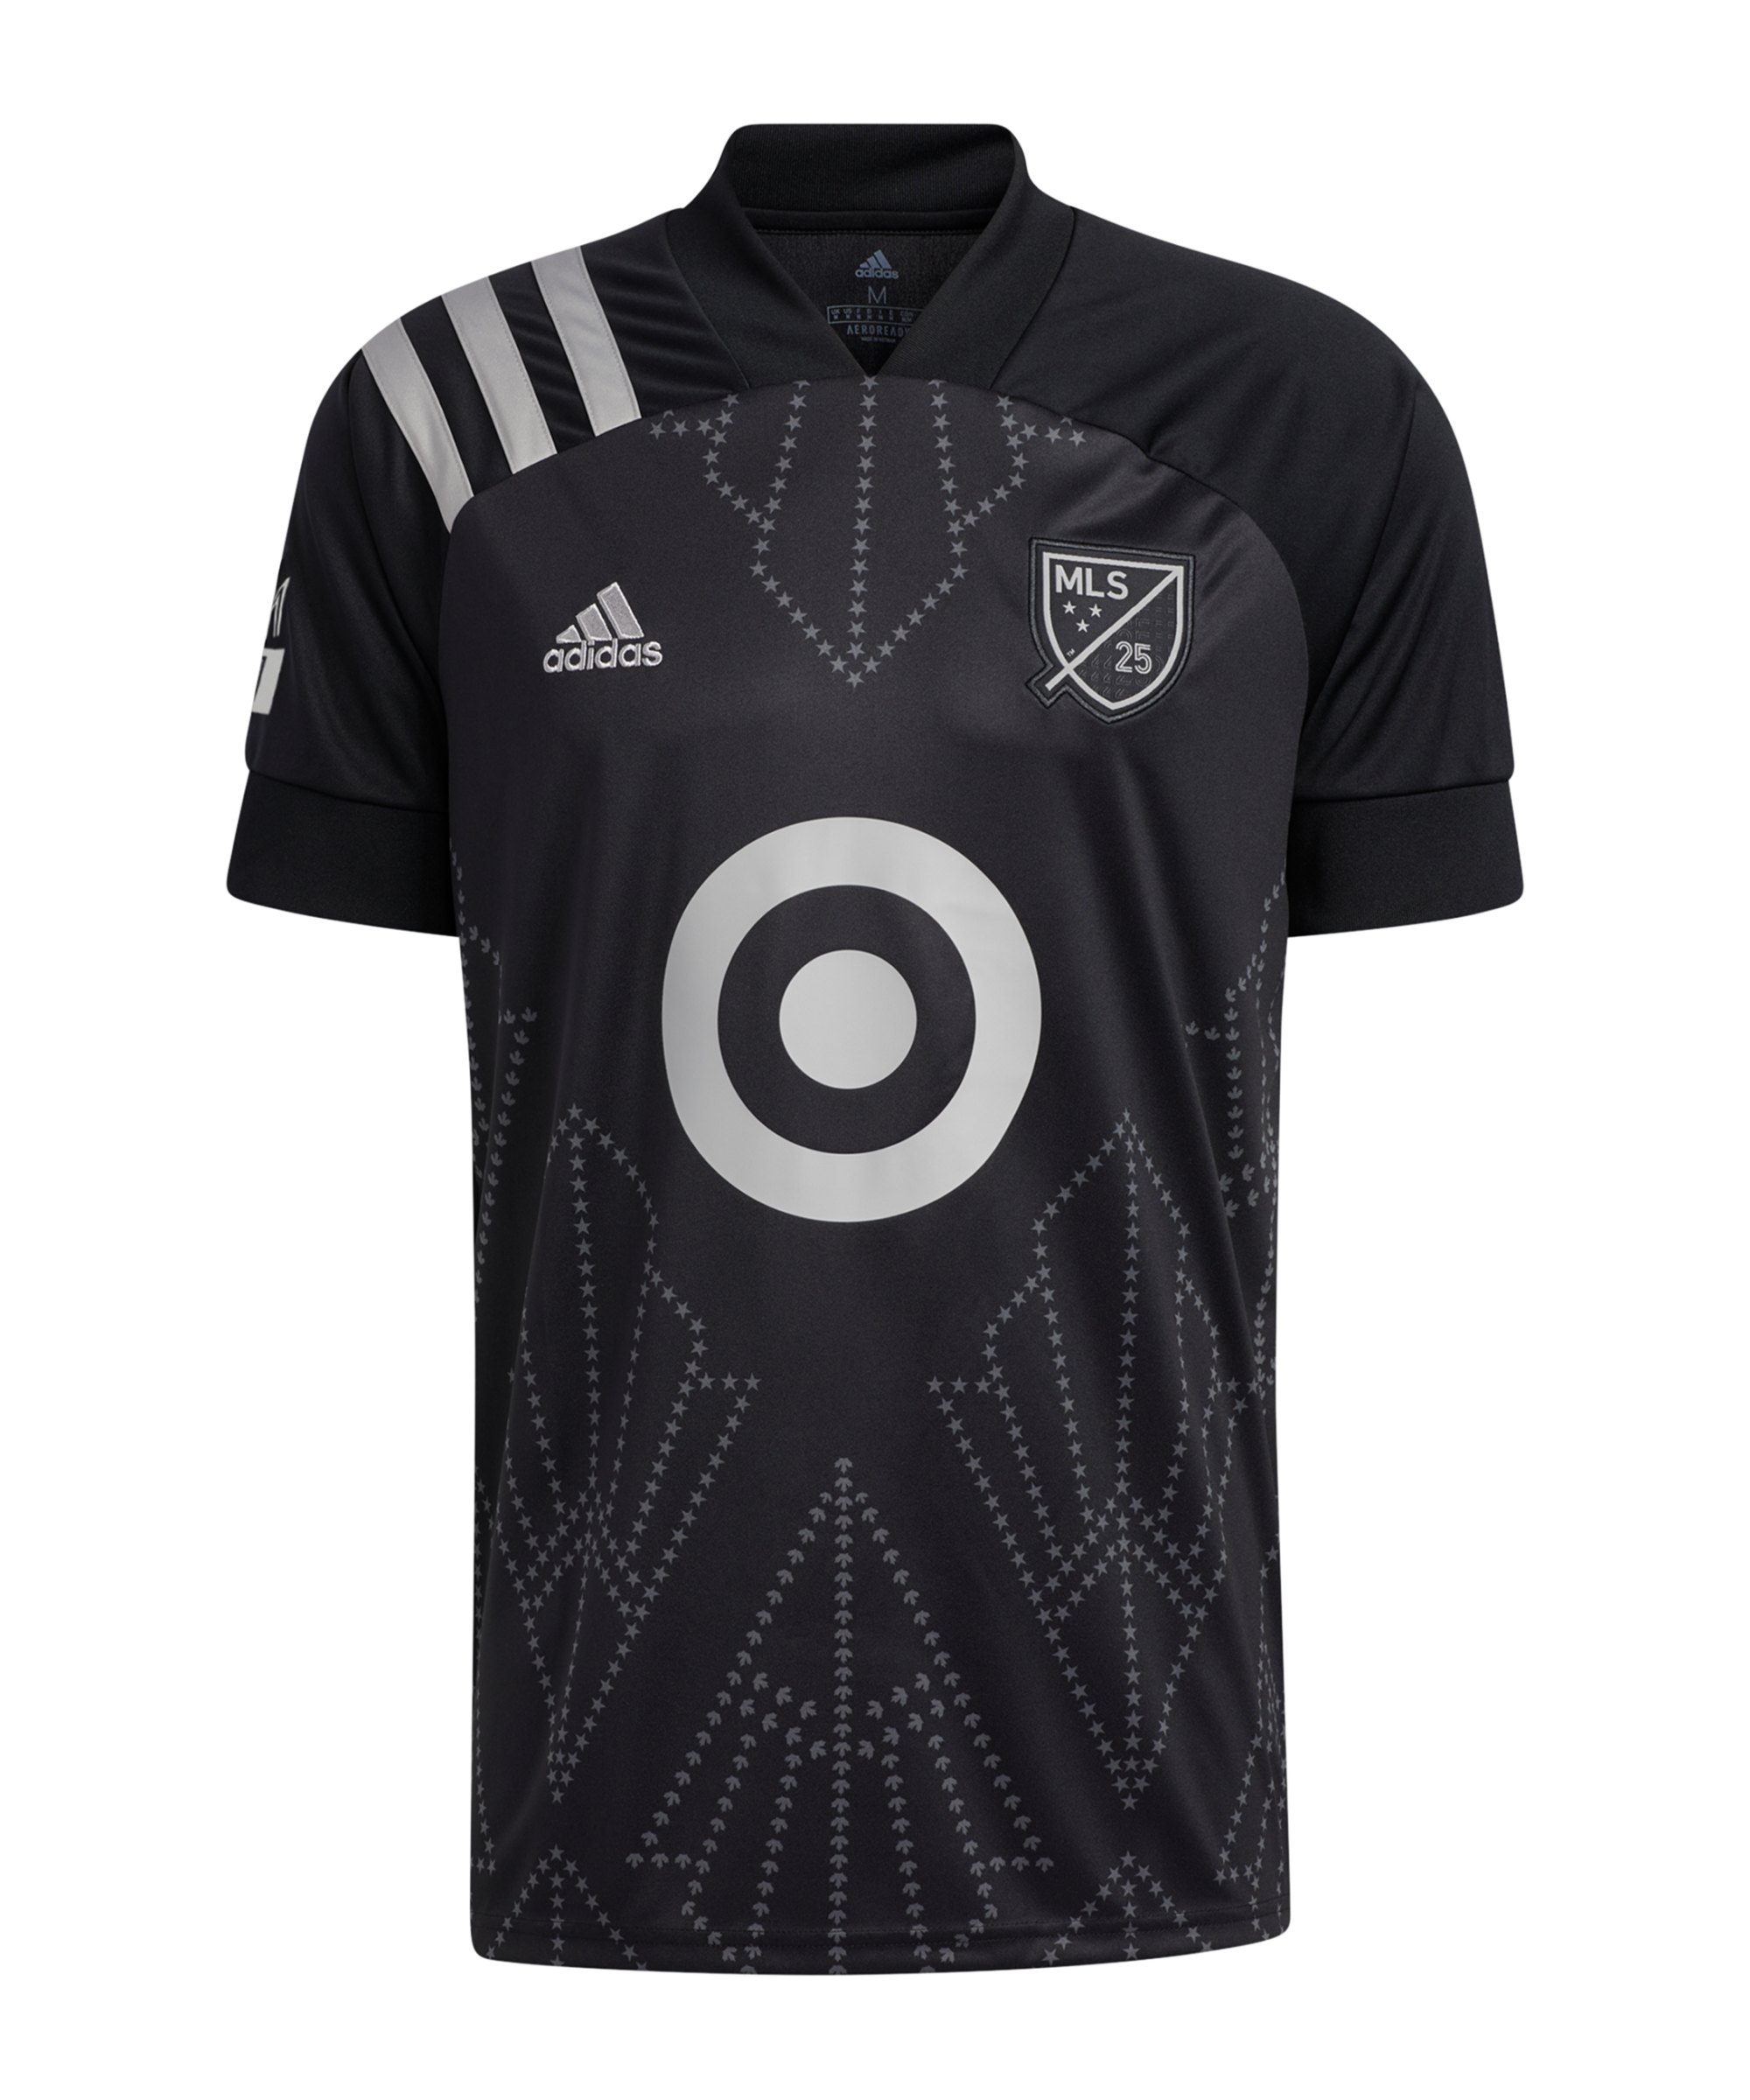 adidas MLS All Star Trikot 2021 Schwarz - schwarz